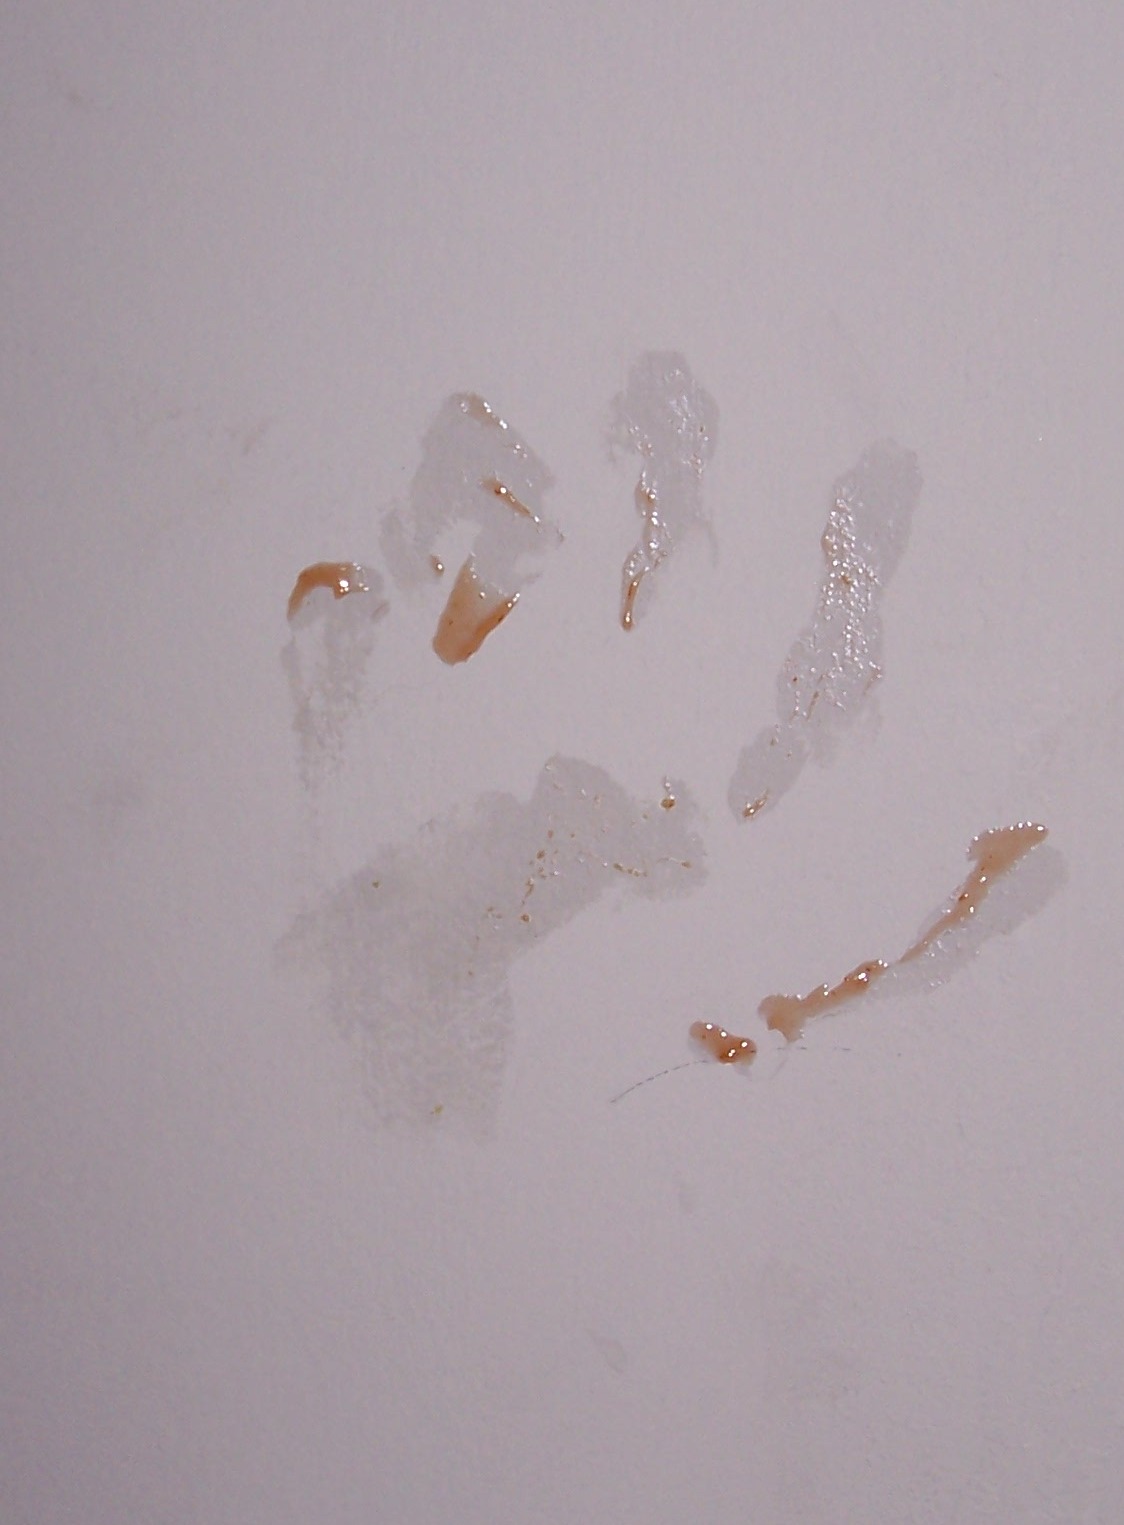 [handprint.jpg]